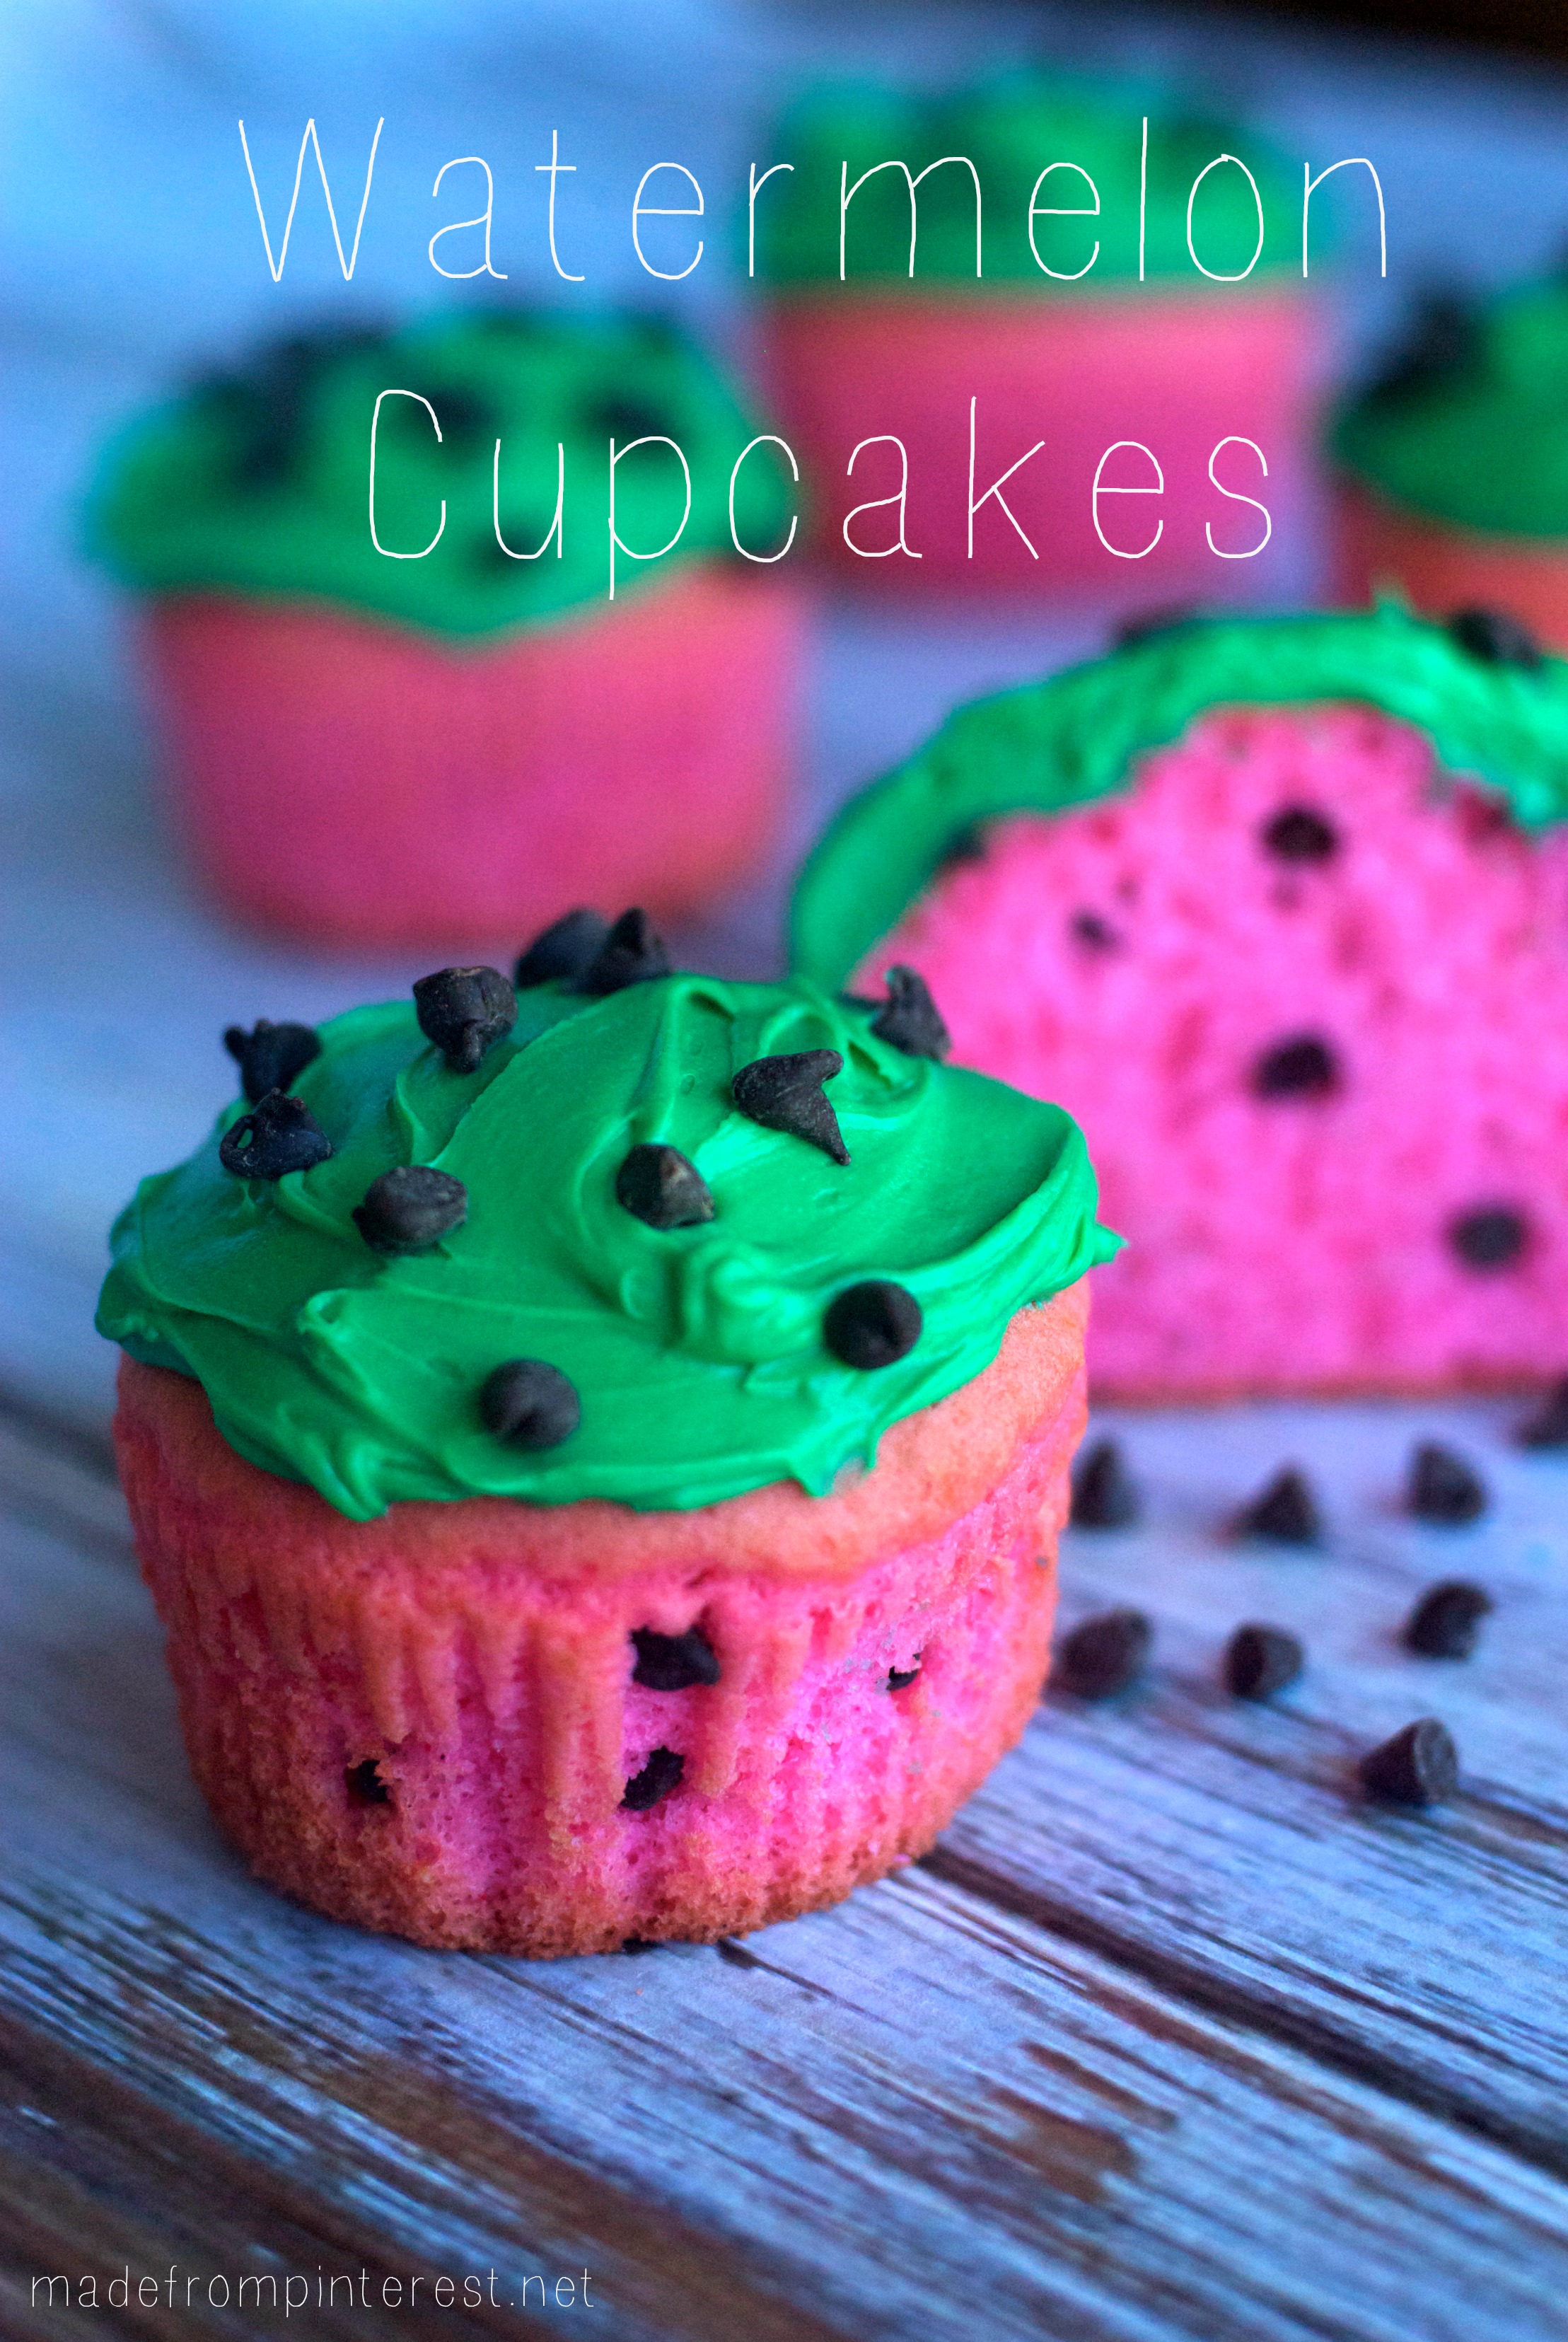 Watermelon Cupcakes - TGIF - This Grandma is Fun